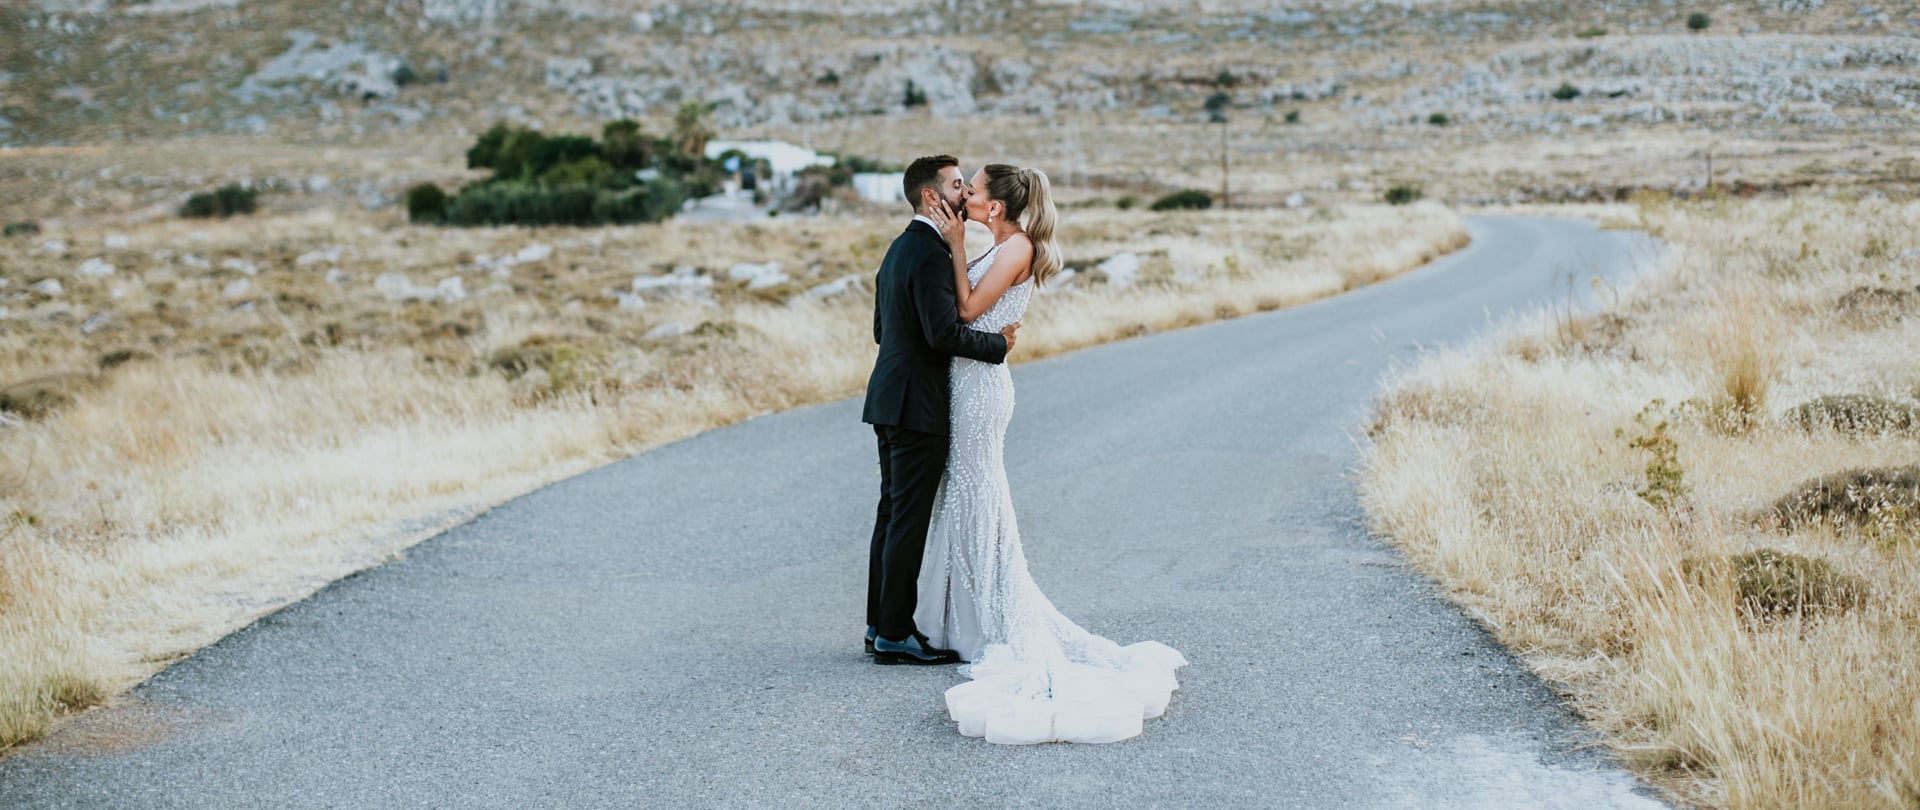 Georgia & Michael Wedding Video Filmed atRhodes,Greece